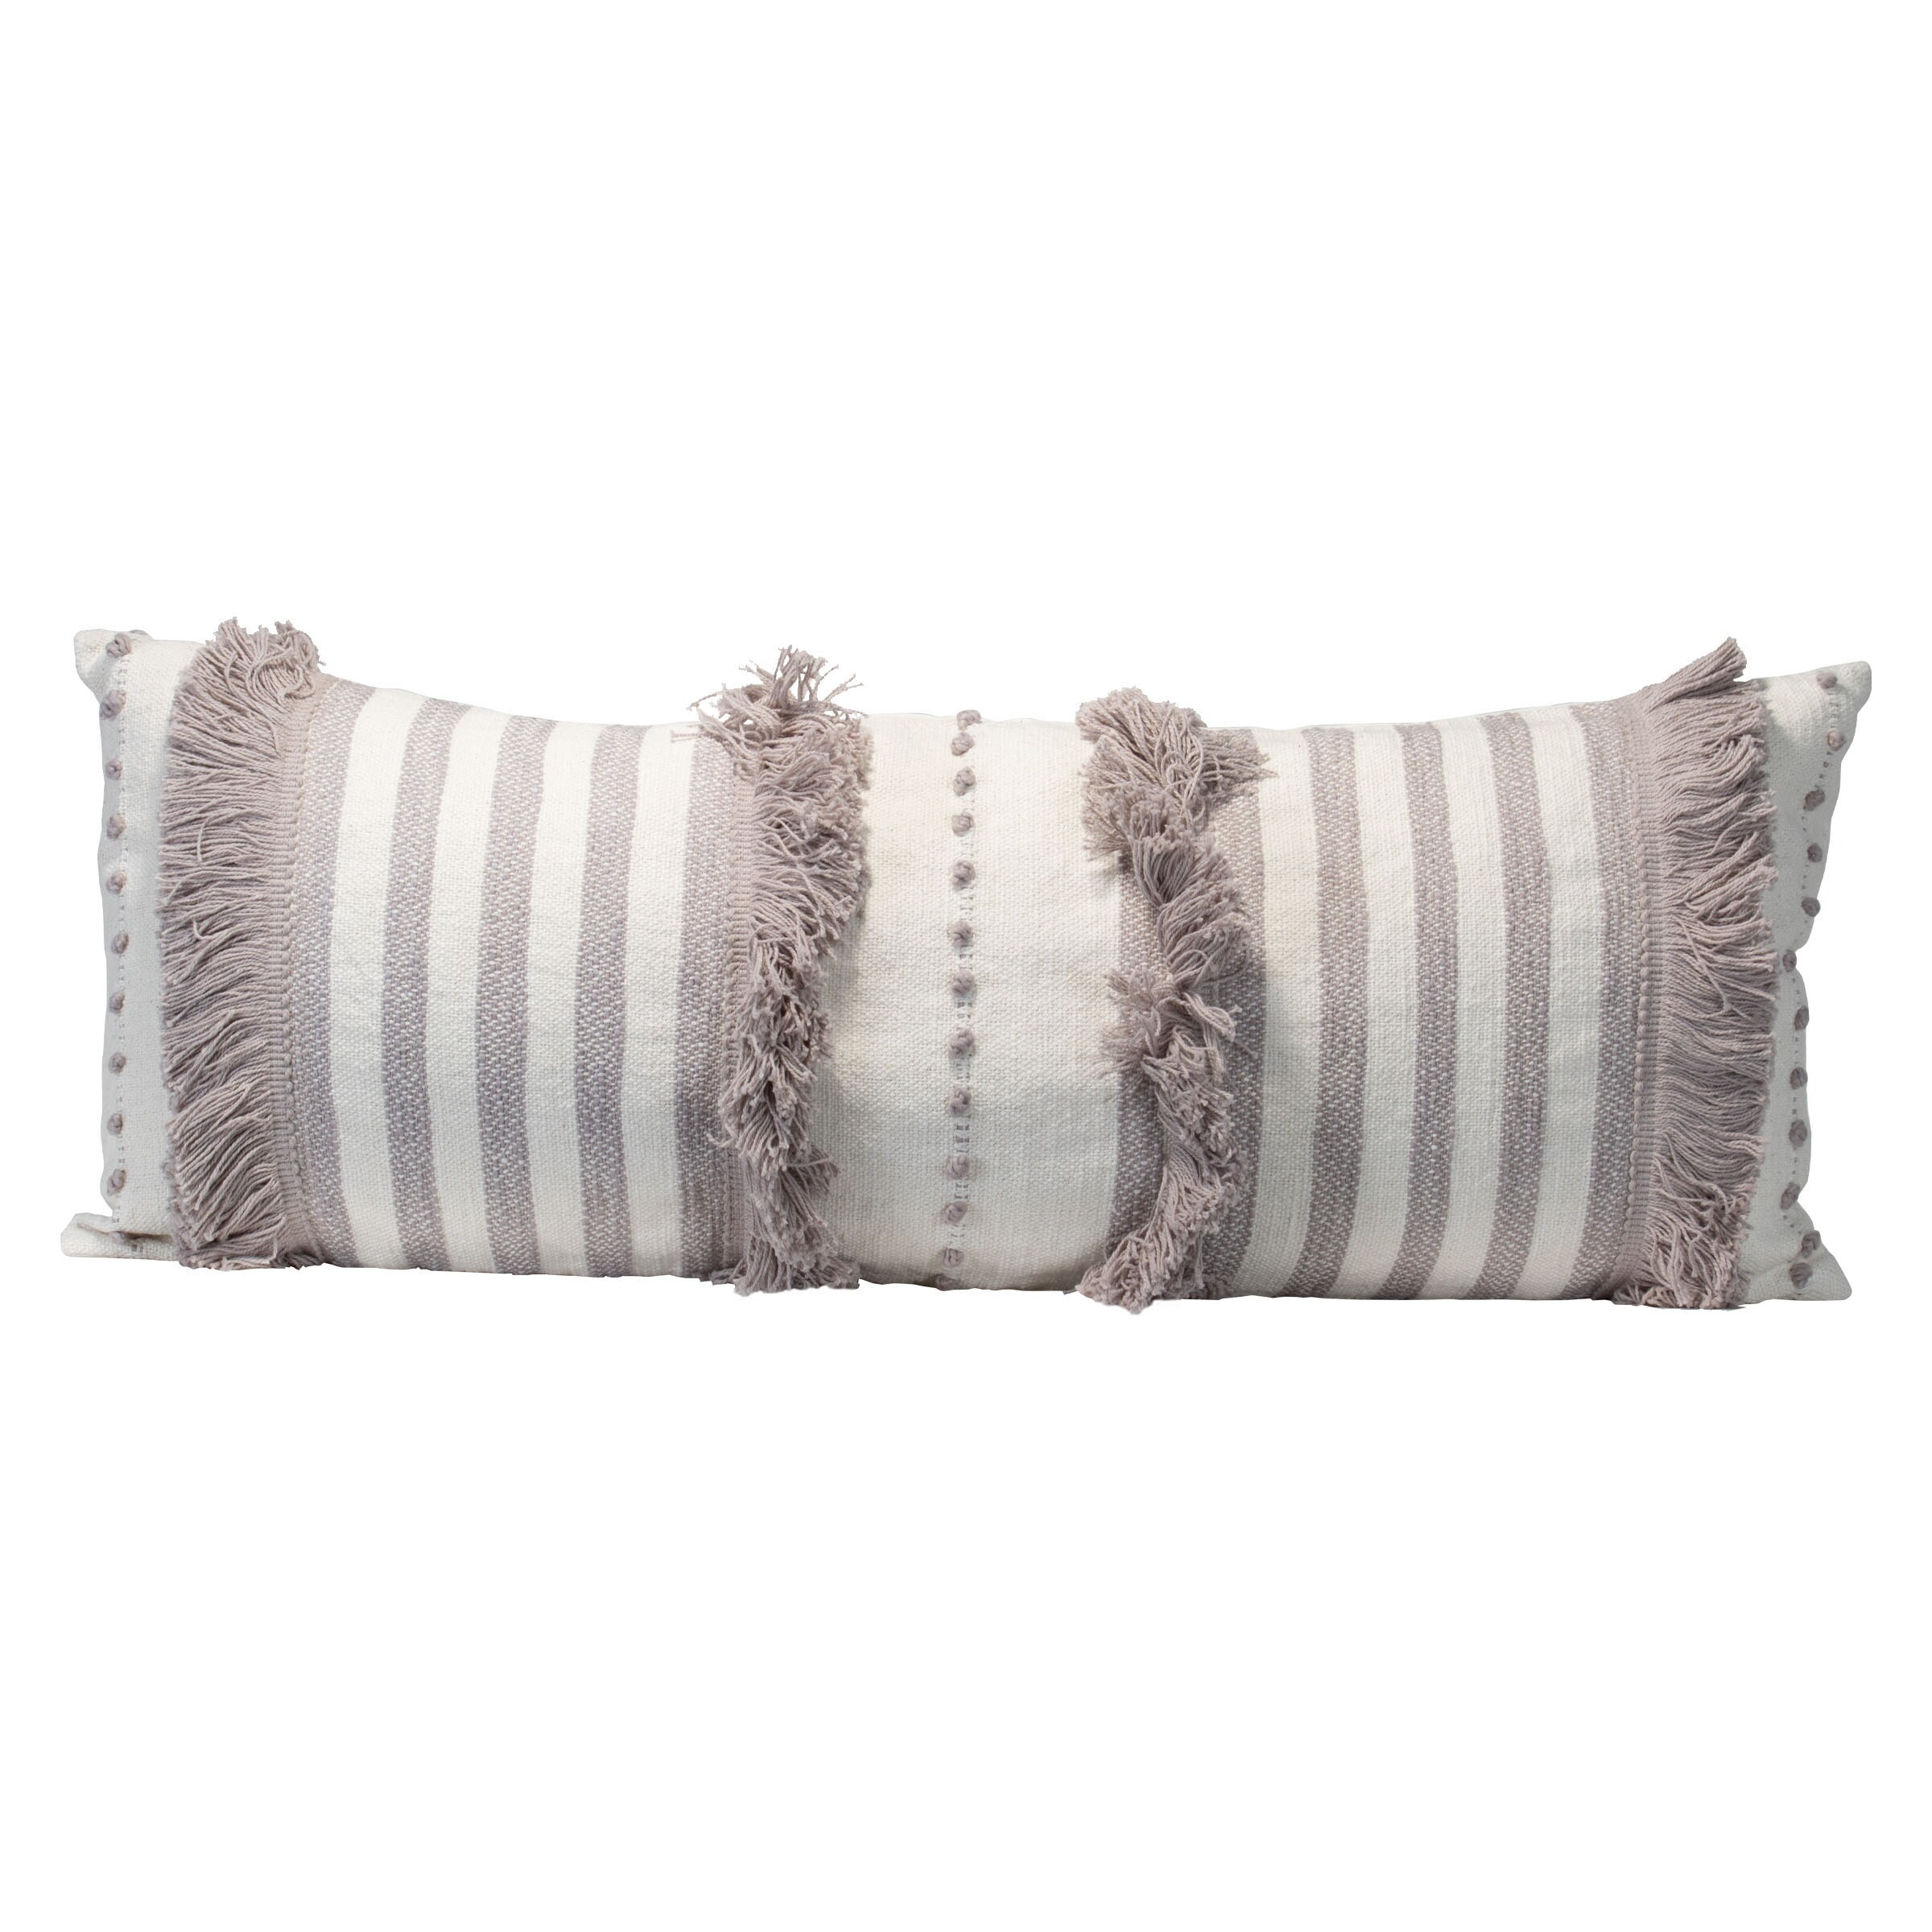 Pianpianzi Pillows Throw Decorative Outdoor Pillows with Included Giant  Pillows Decorative Pillowcase Home 2019 Life Marine Linen 60x60cm Case 